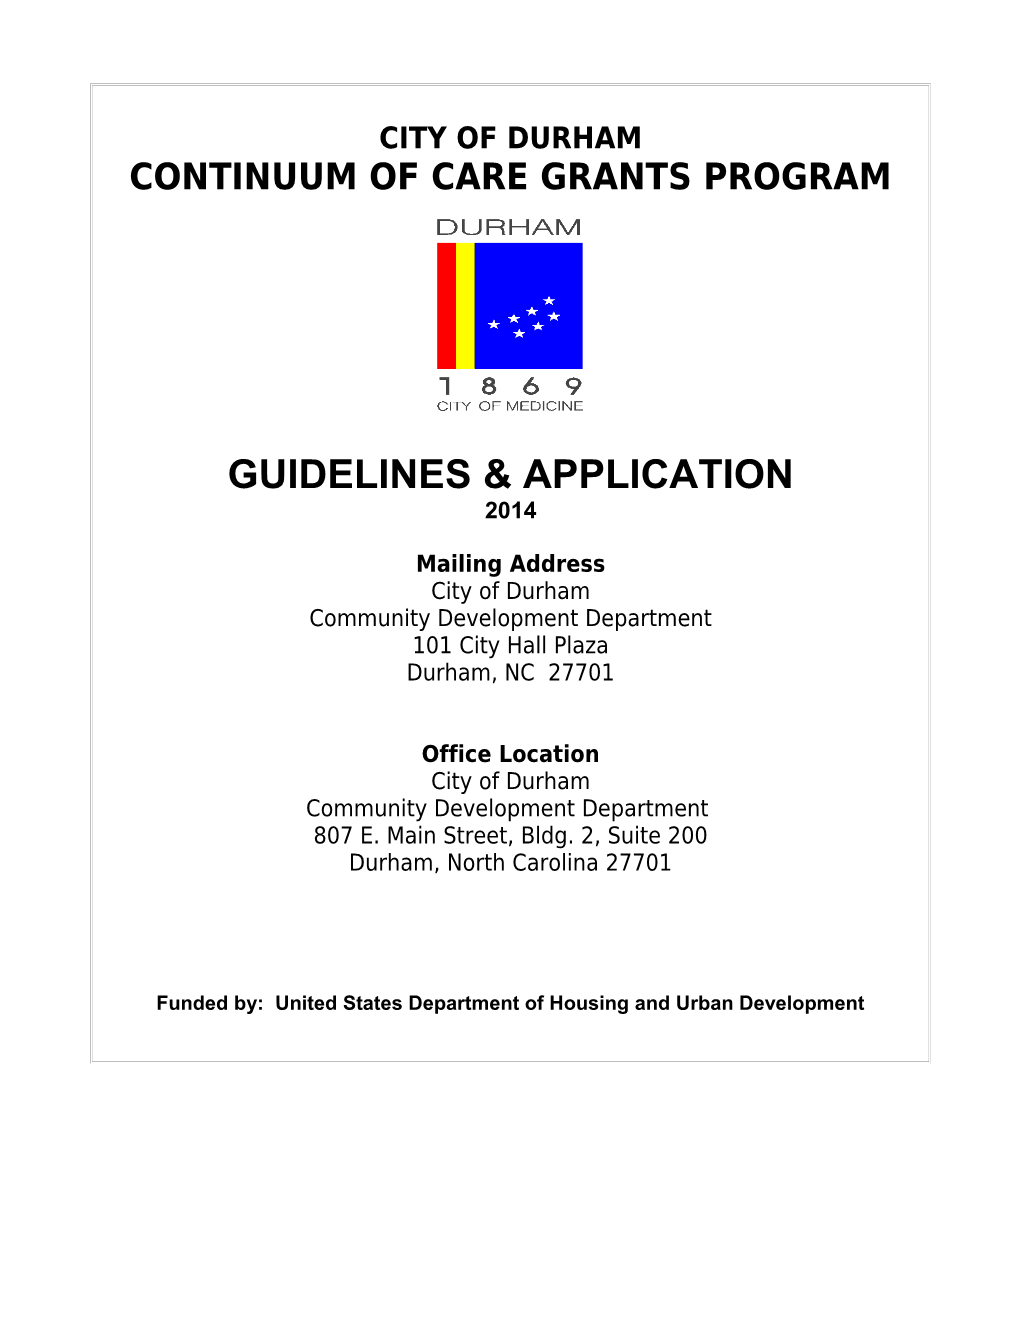 City of Durham, Continuum of Care Grant Funding Application 2014